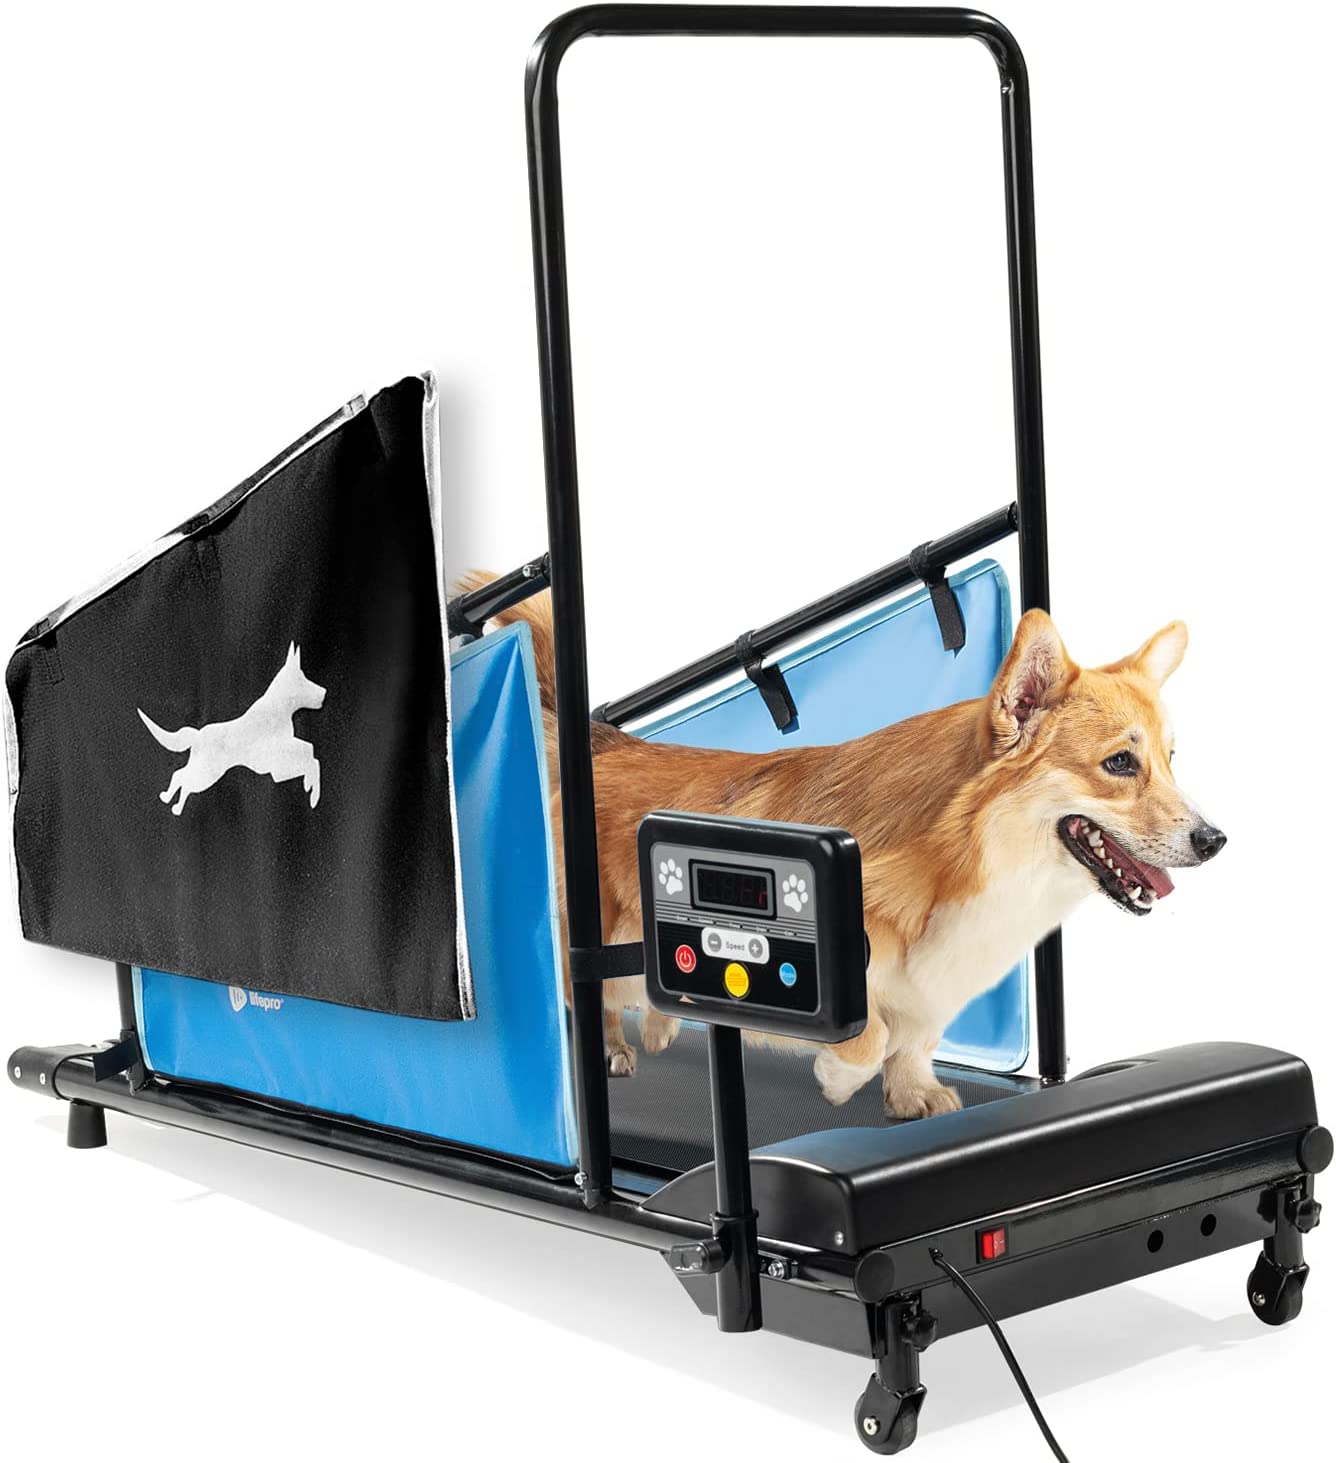 4. LifePro Dog Treadmill Small Dogs